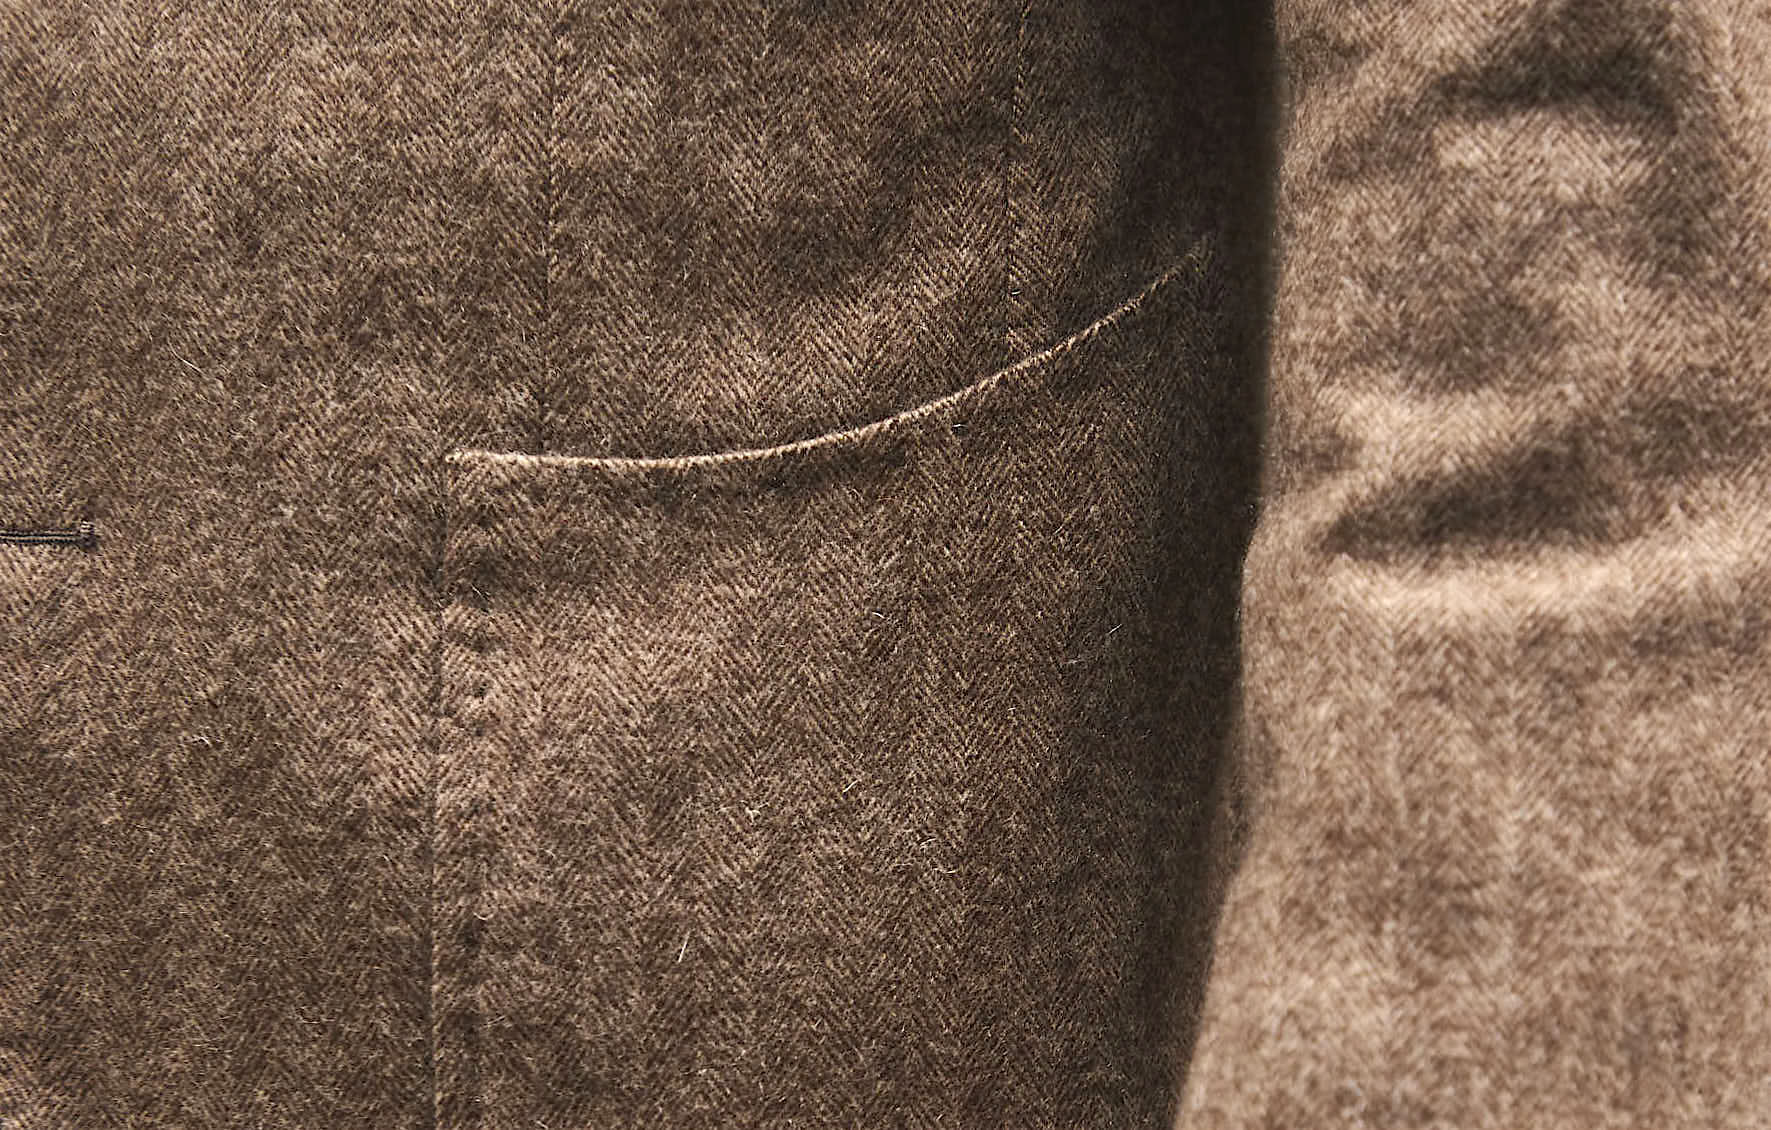 Jacket and jeans: vintage cashmere from Eduardo de Simone